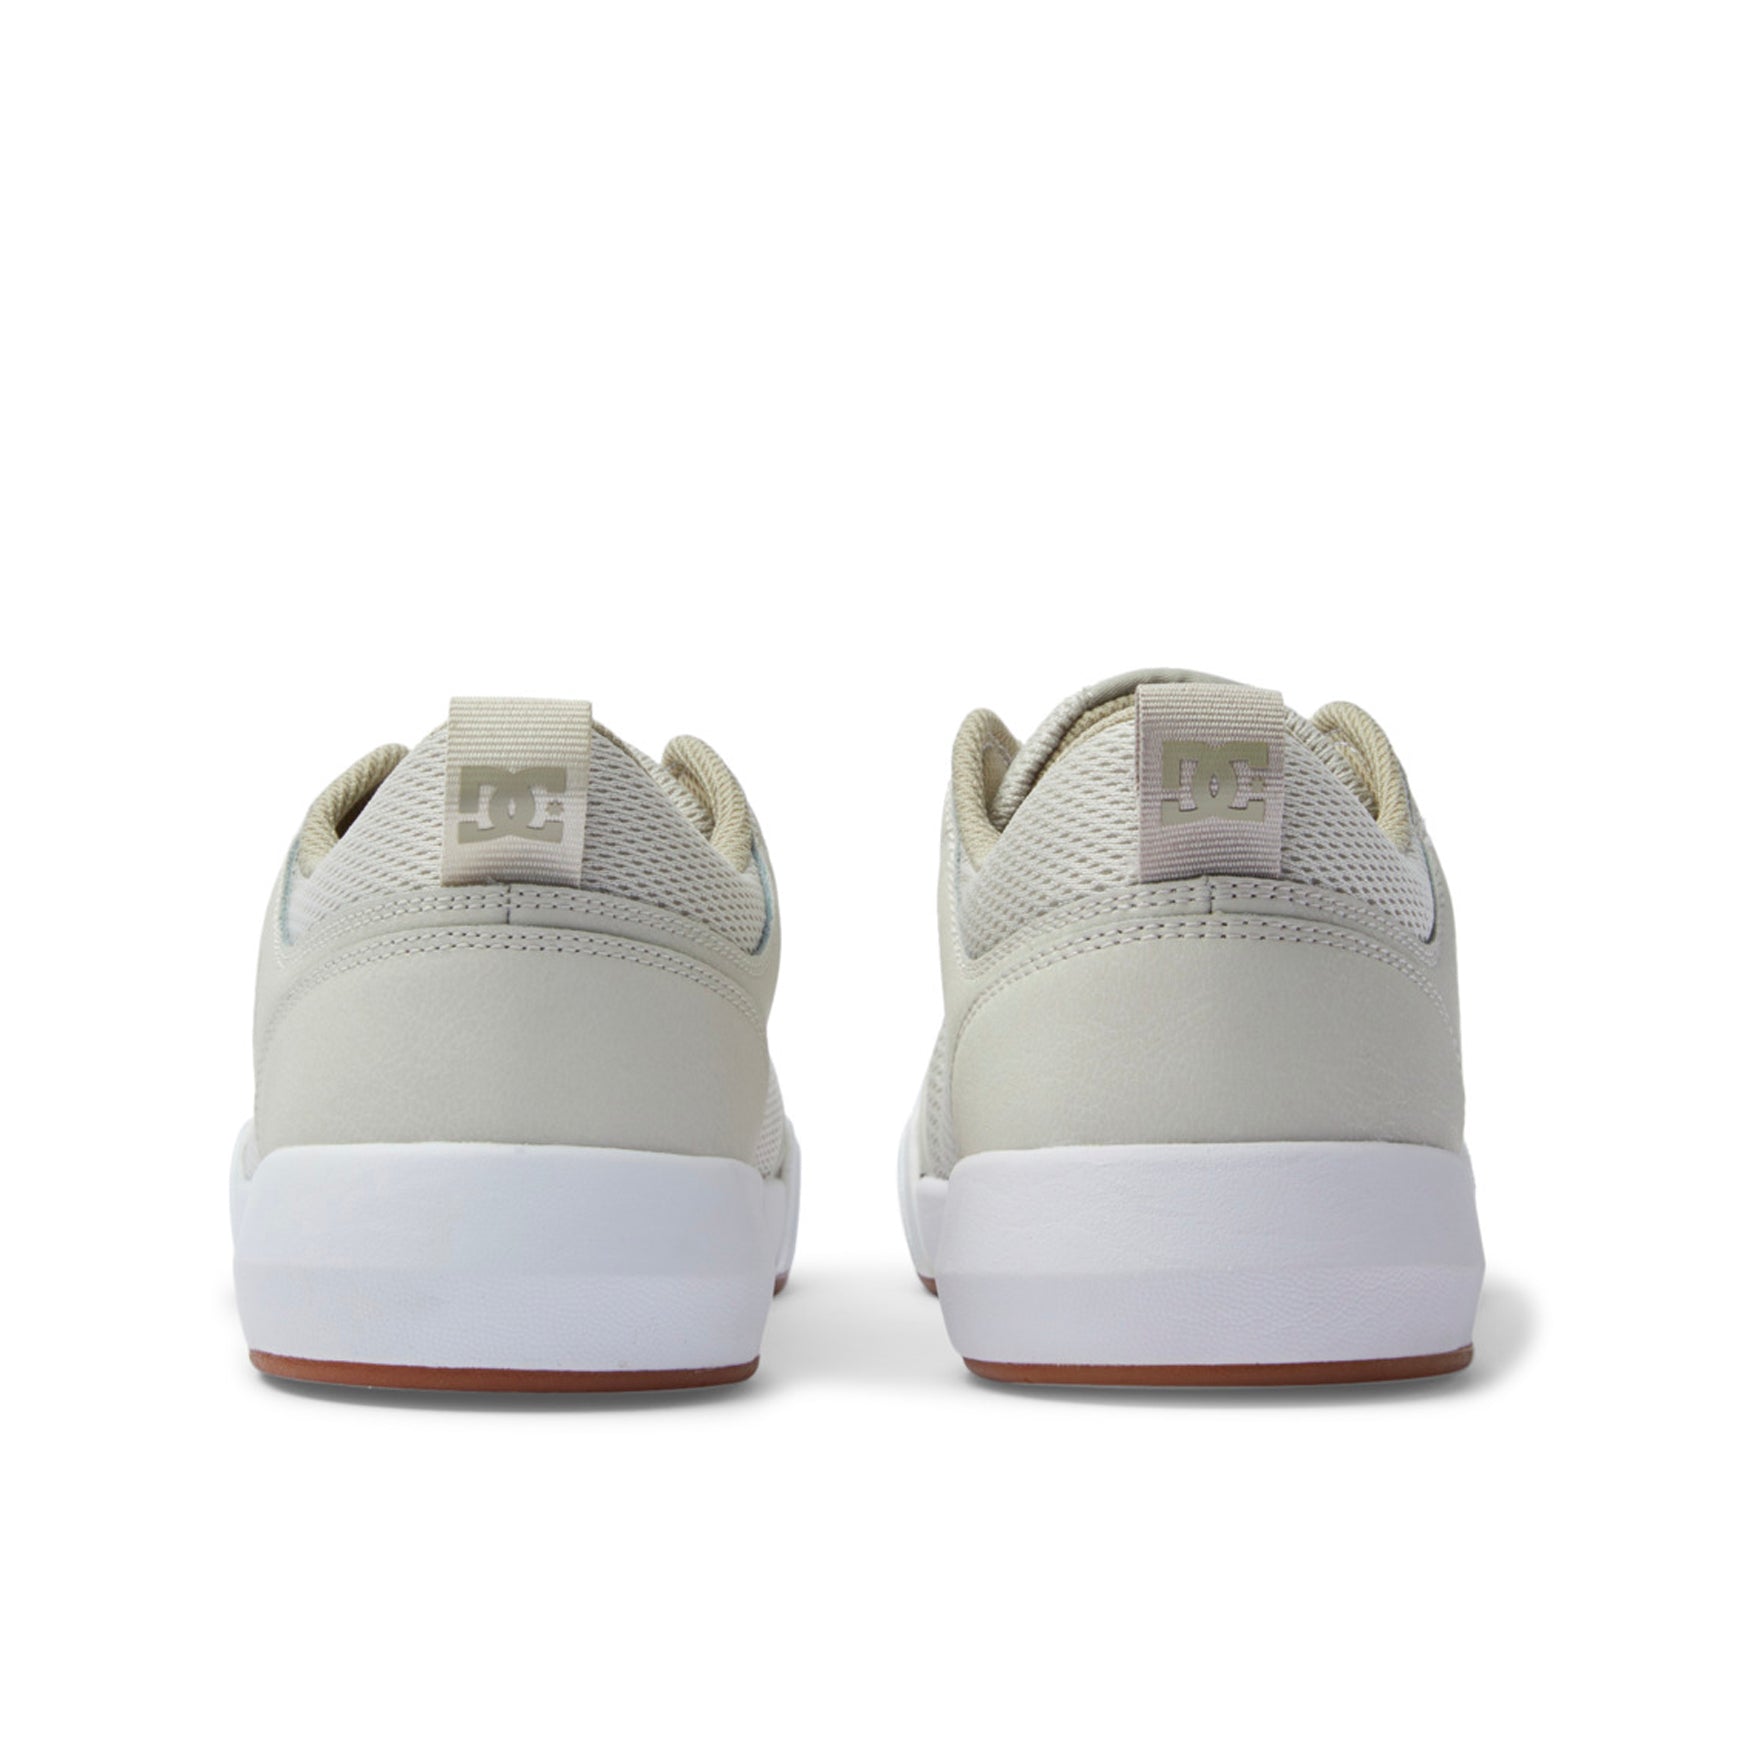 DC Transit Shoes - Chestnut/ Off White - Prime Delux Store